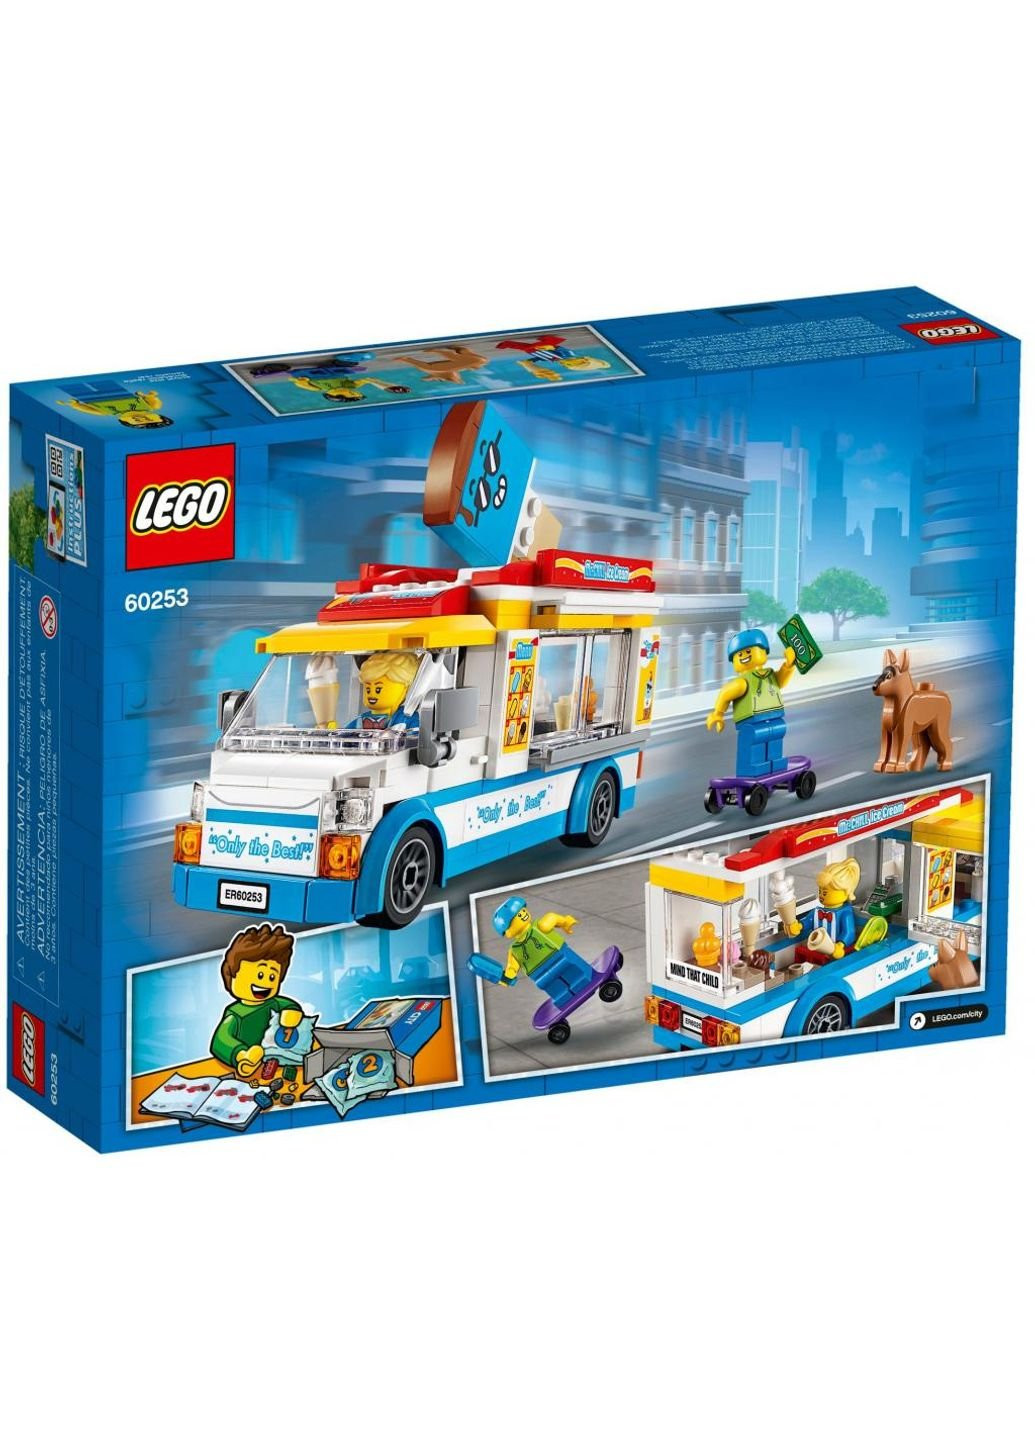 Конструктор City Great Vehicles Вантажівка мороженщика 200 деталей (60253) Lego (251223073)